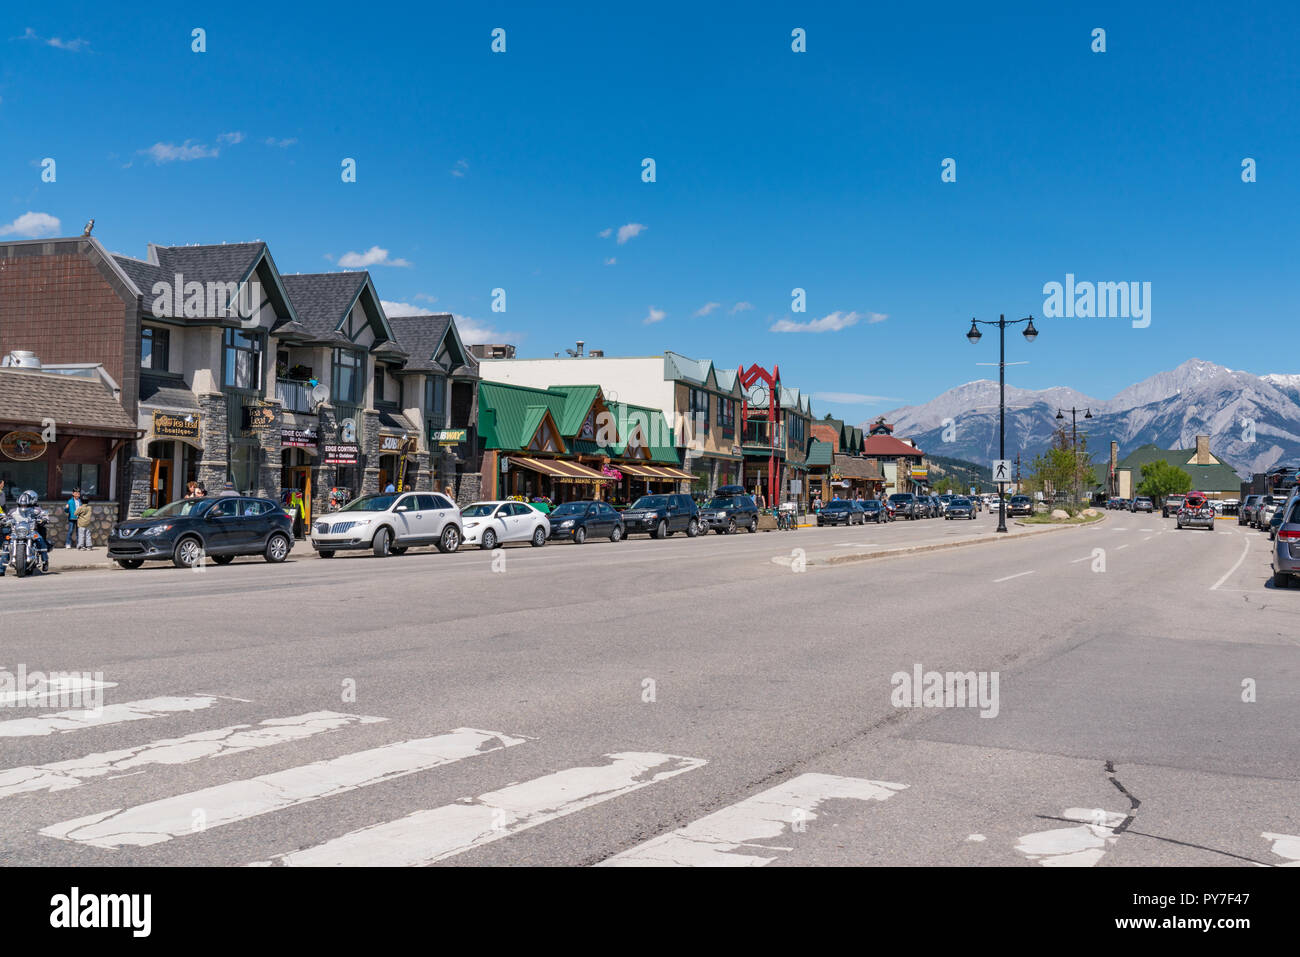 JASPER, CANADA - JULY 5, 2018: Shops in the city of Jasper, Alberta along Connaught Drive. Stock Photo